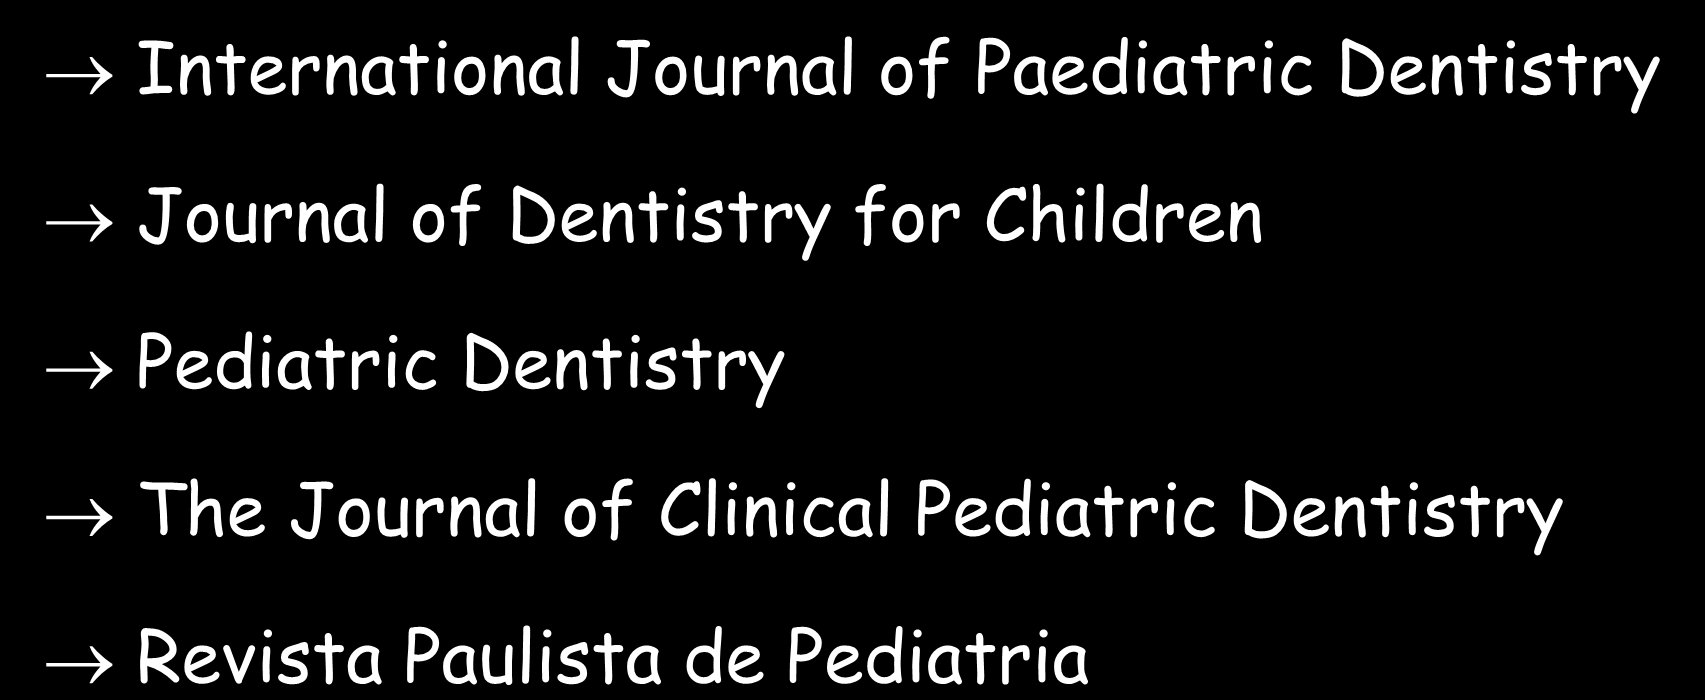 PERIÓDICOS - SUGESTÕES ODONTOPEDIATRIA International Journal of Paediatric Dentistry Journal of Dentistry